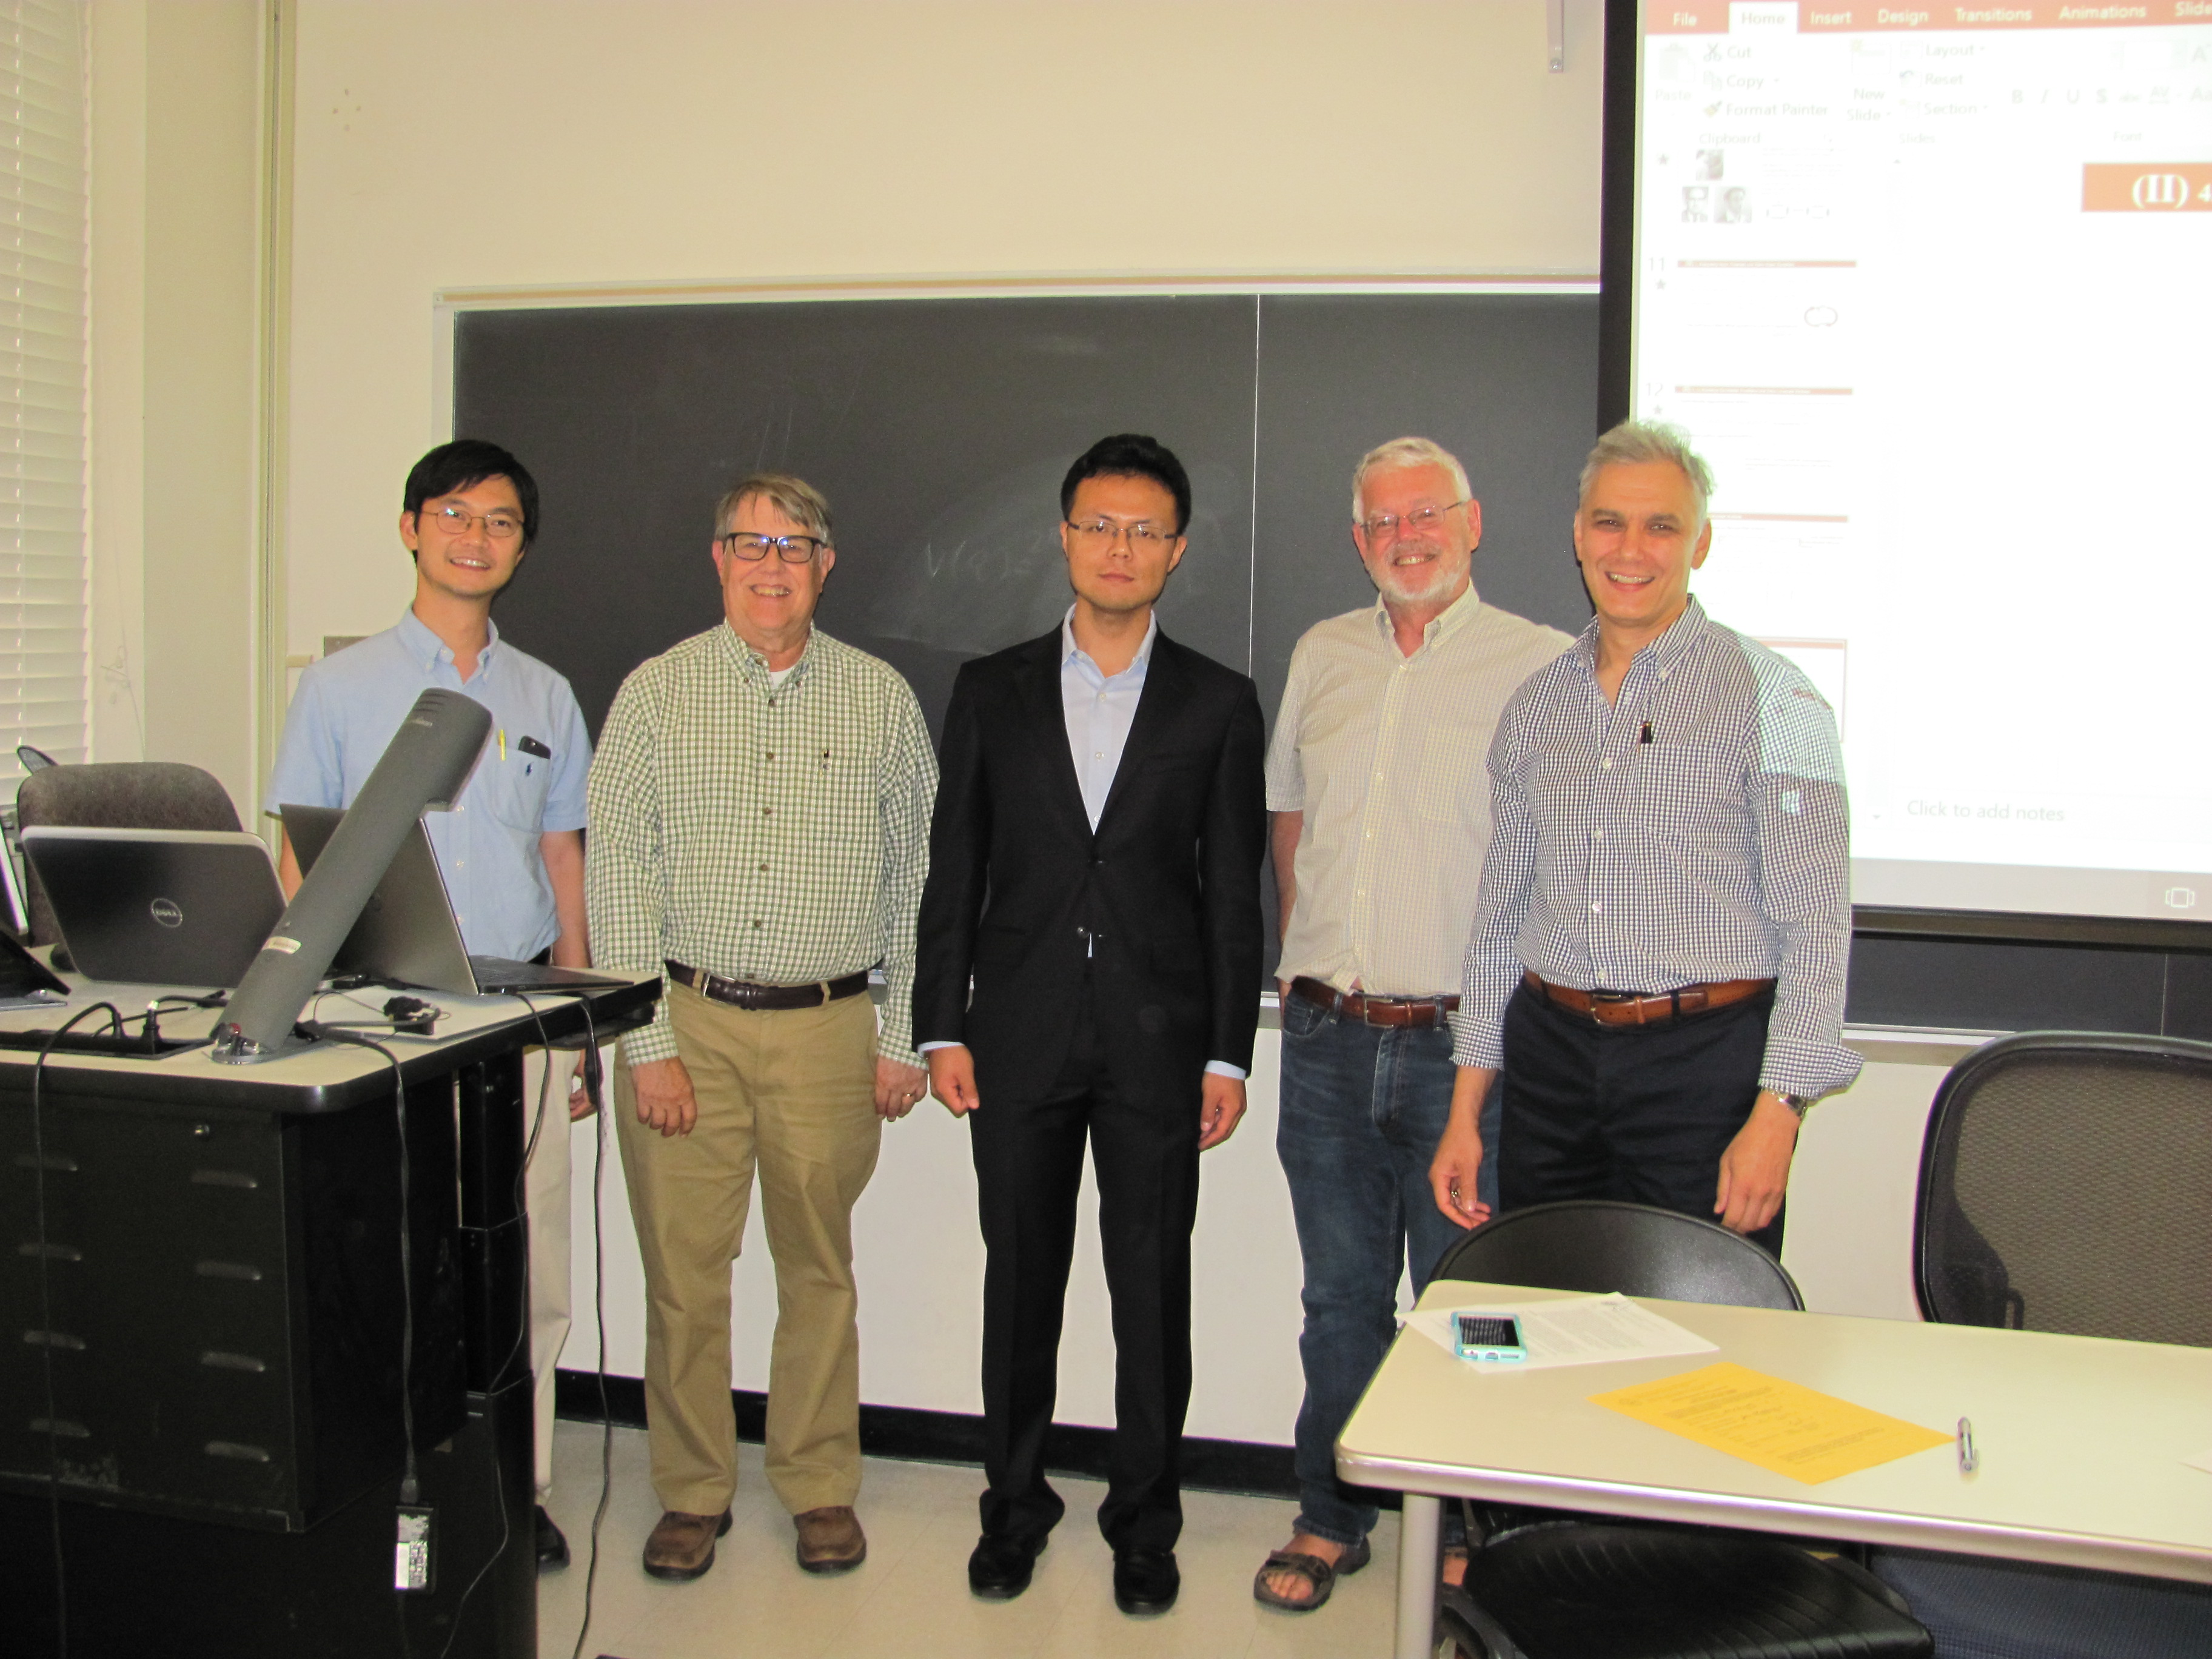 Keji Lai, Lingyuan, Jim Chelikowsky, Allan MacDonald, and Alex.